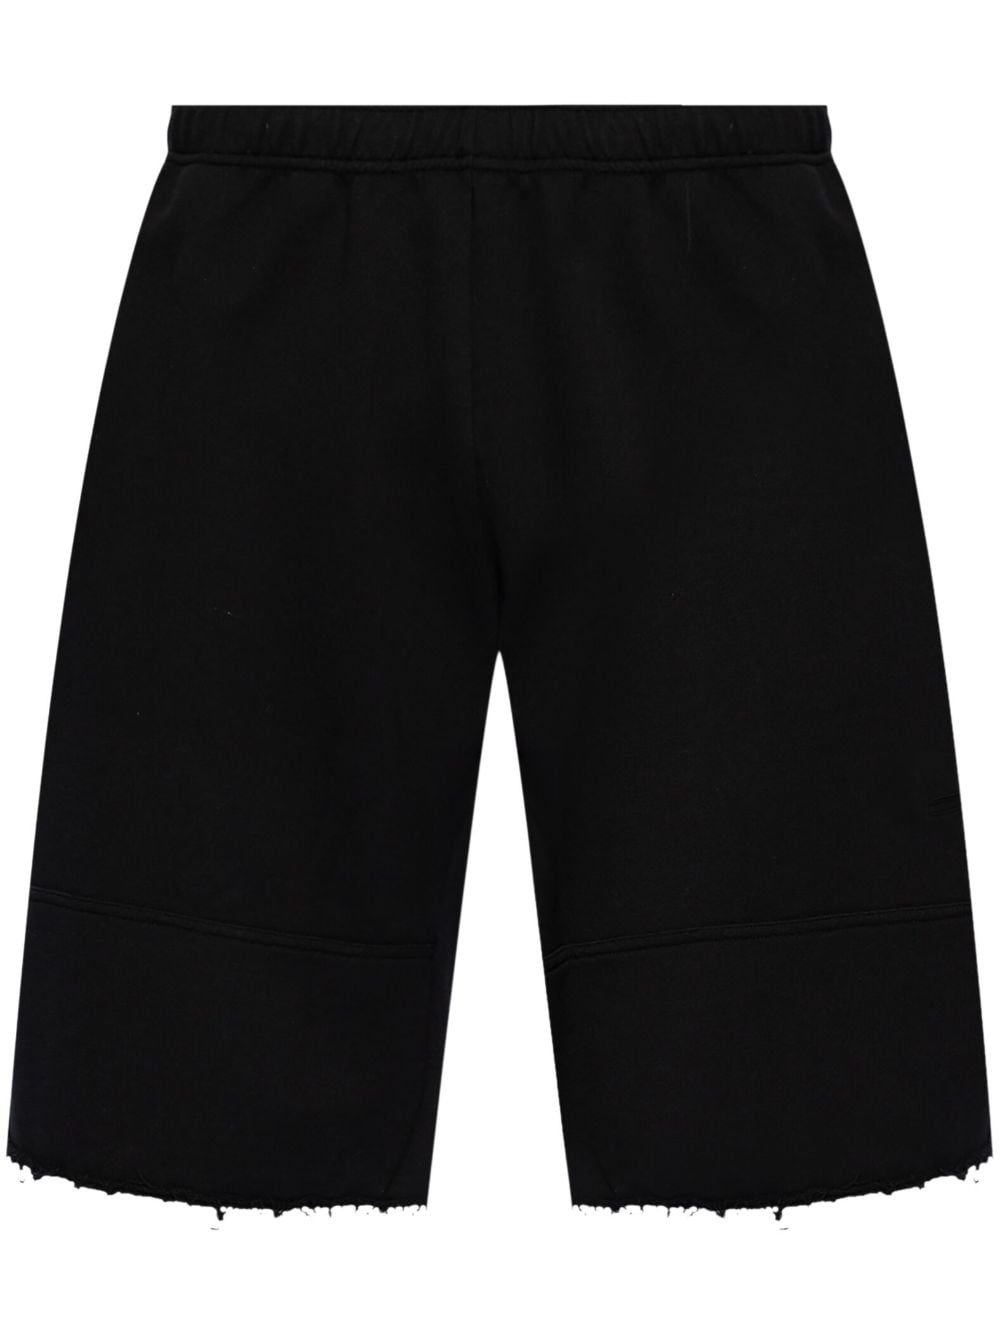 raw-cut cotton bermuda shorts - 1